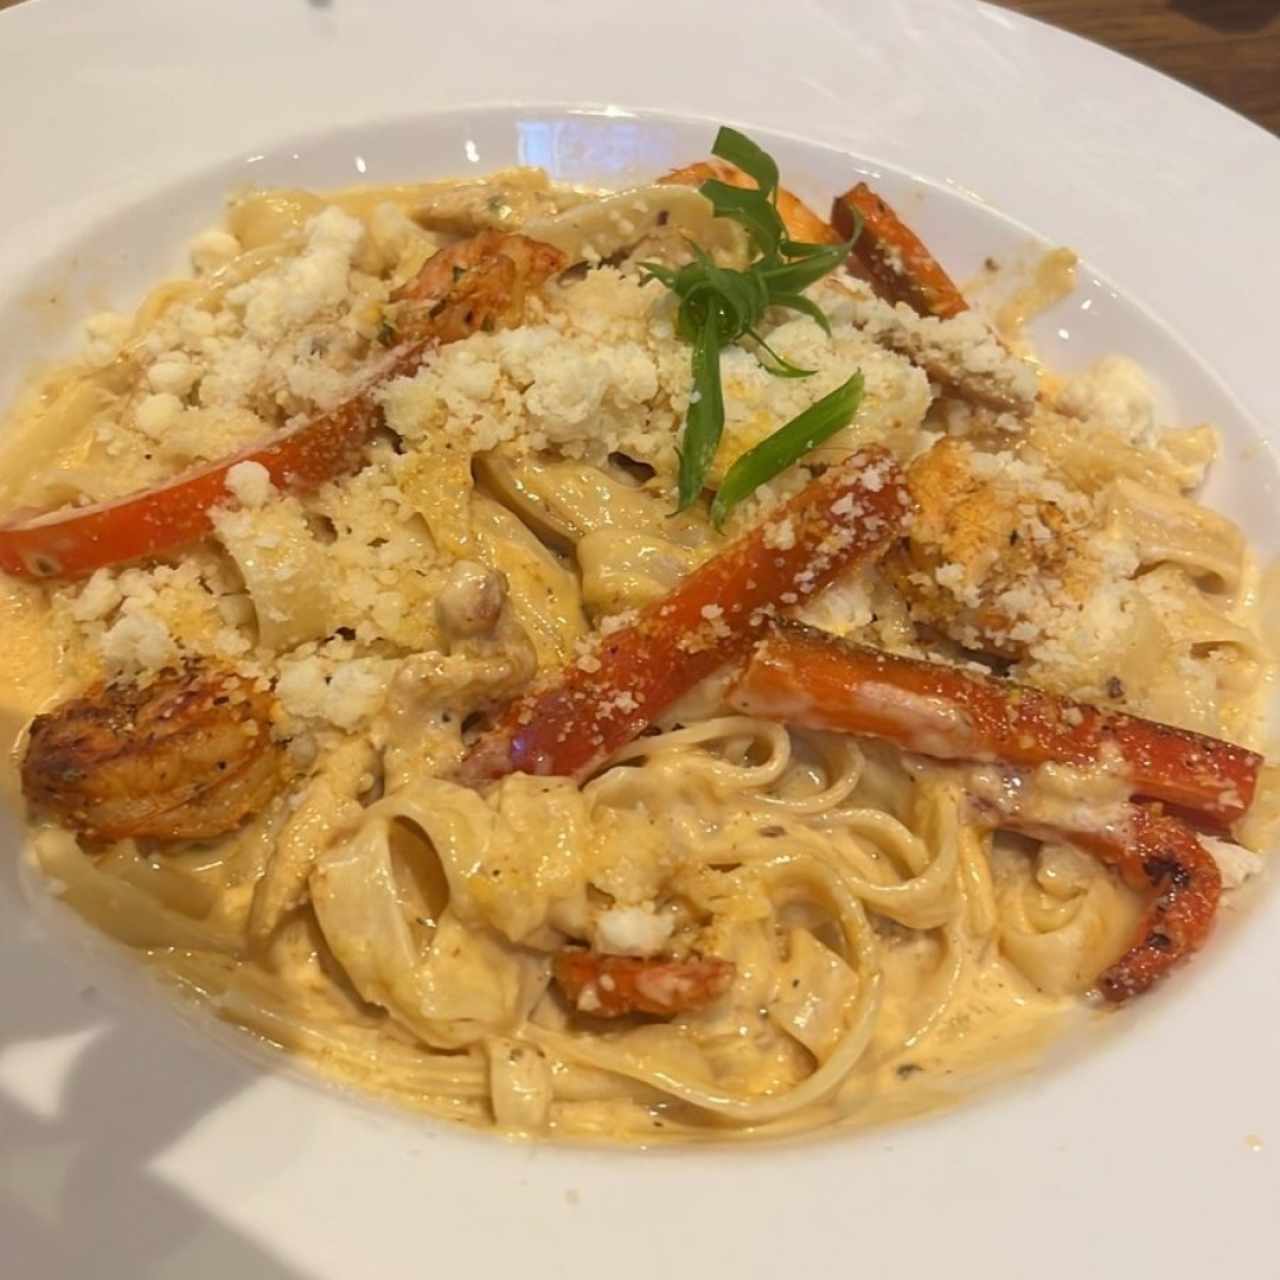 Shrimp and chicken pasta